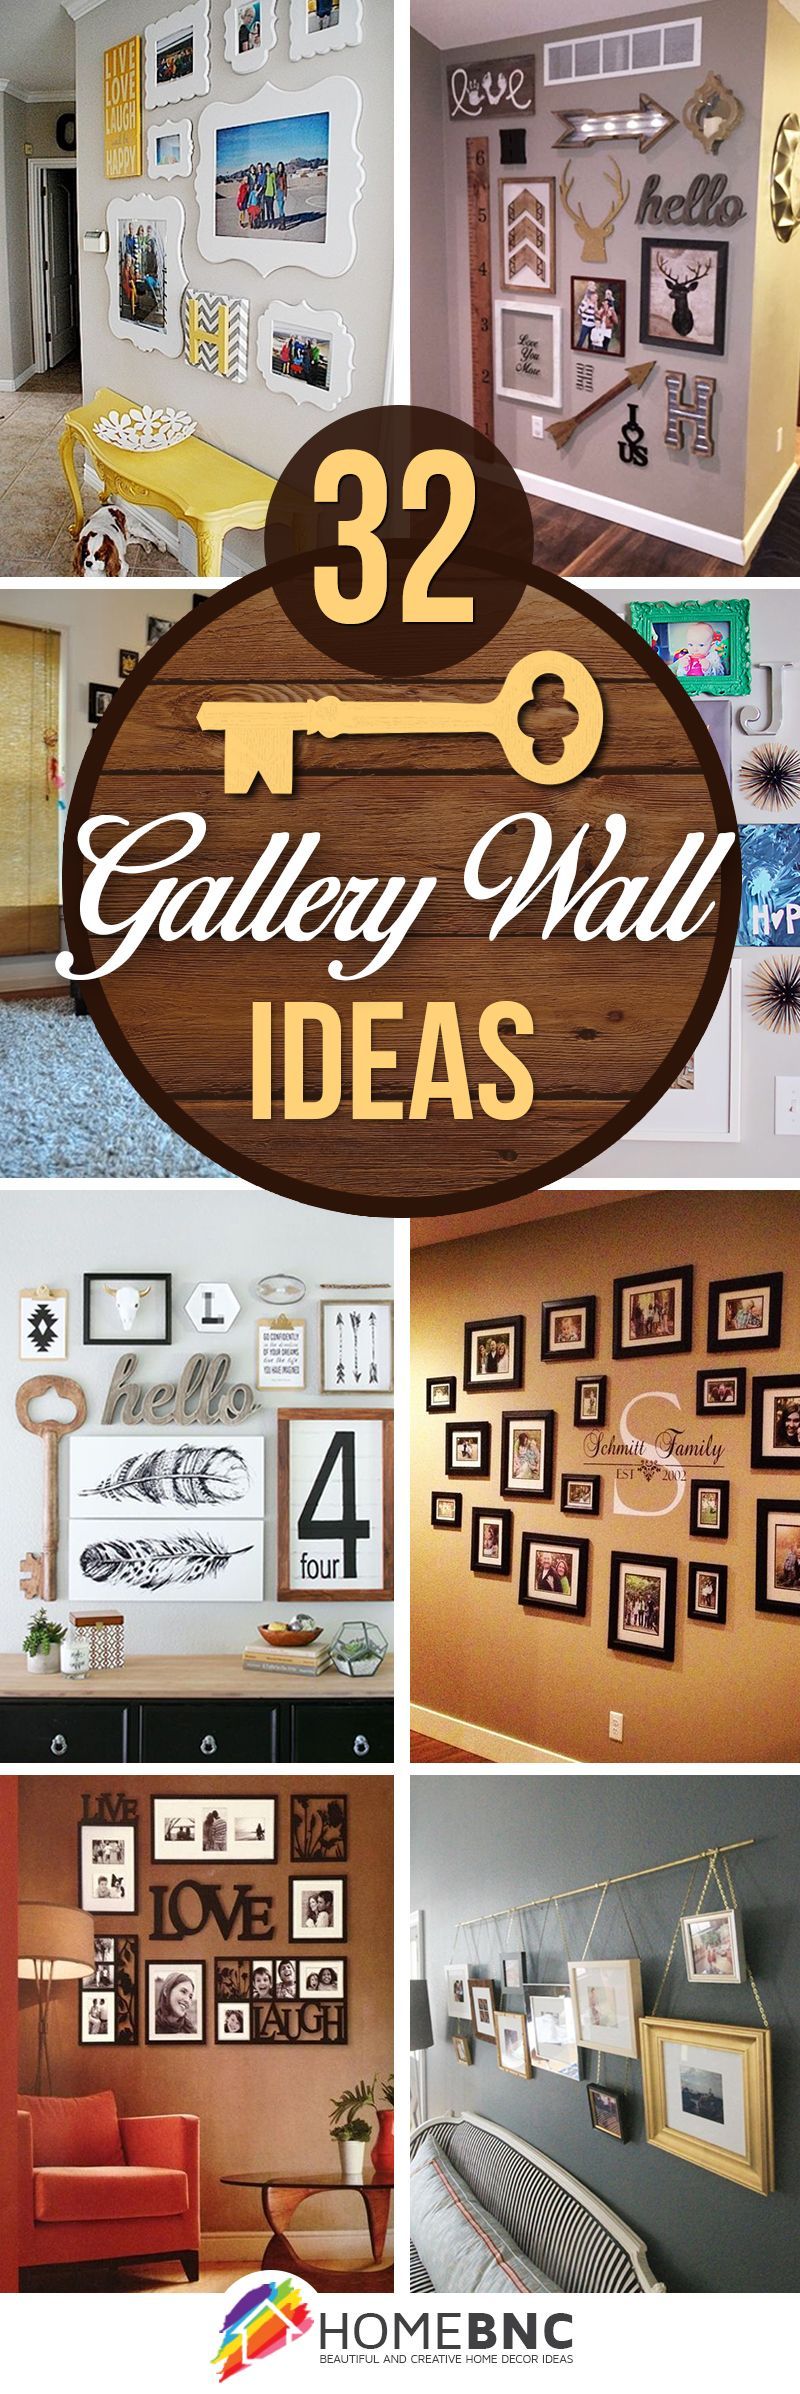 Gallery Wall Designs